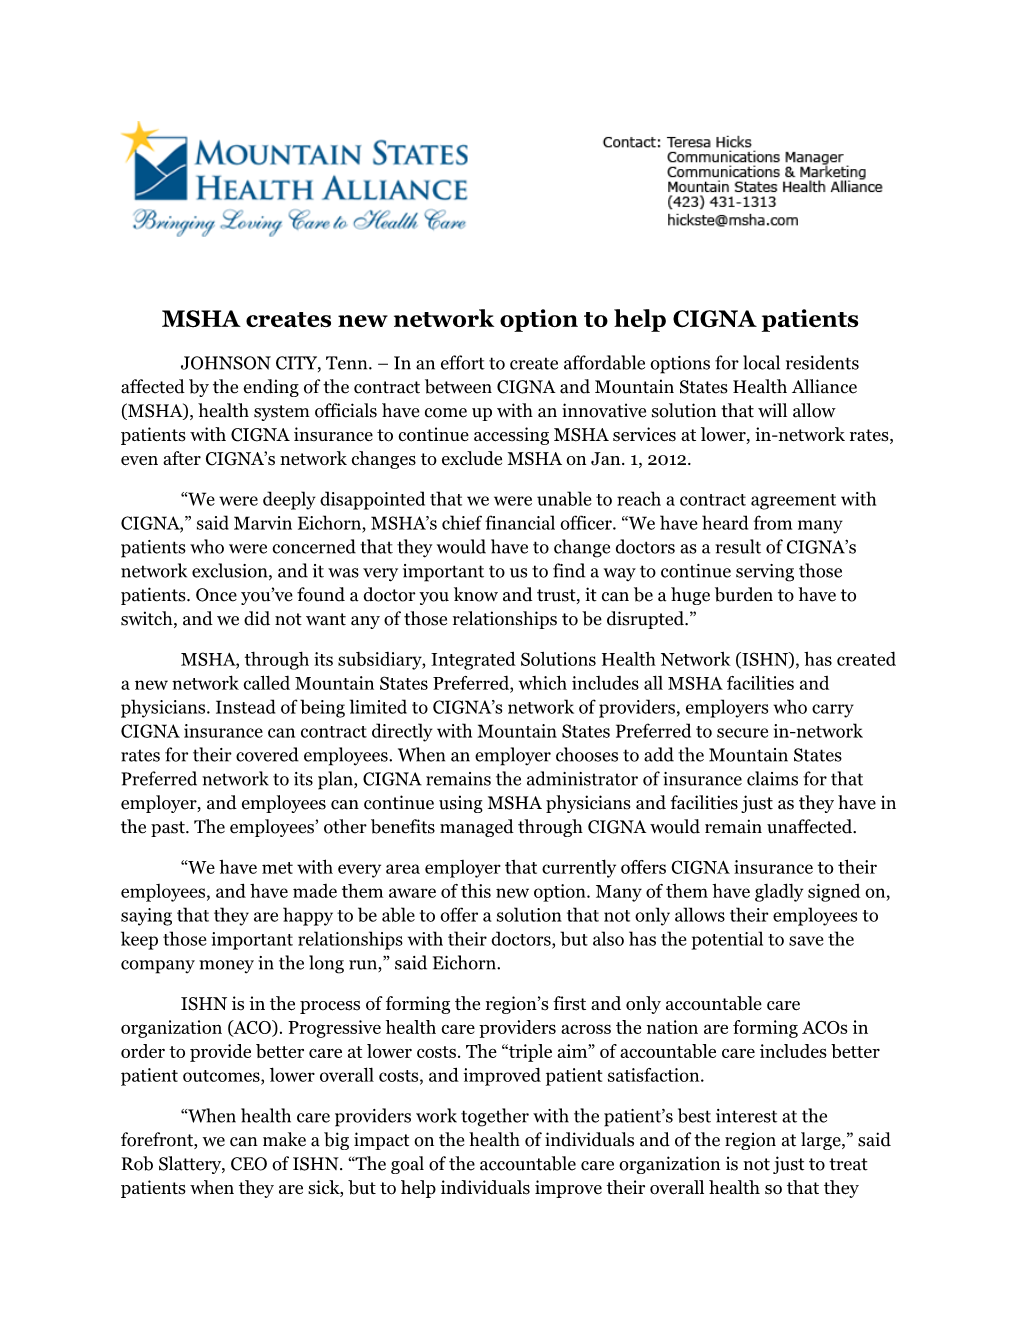 MSHA Creates New Network Option to Help CIGNA Patients